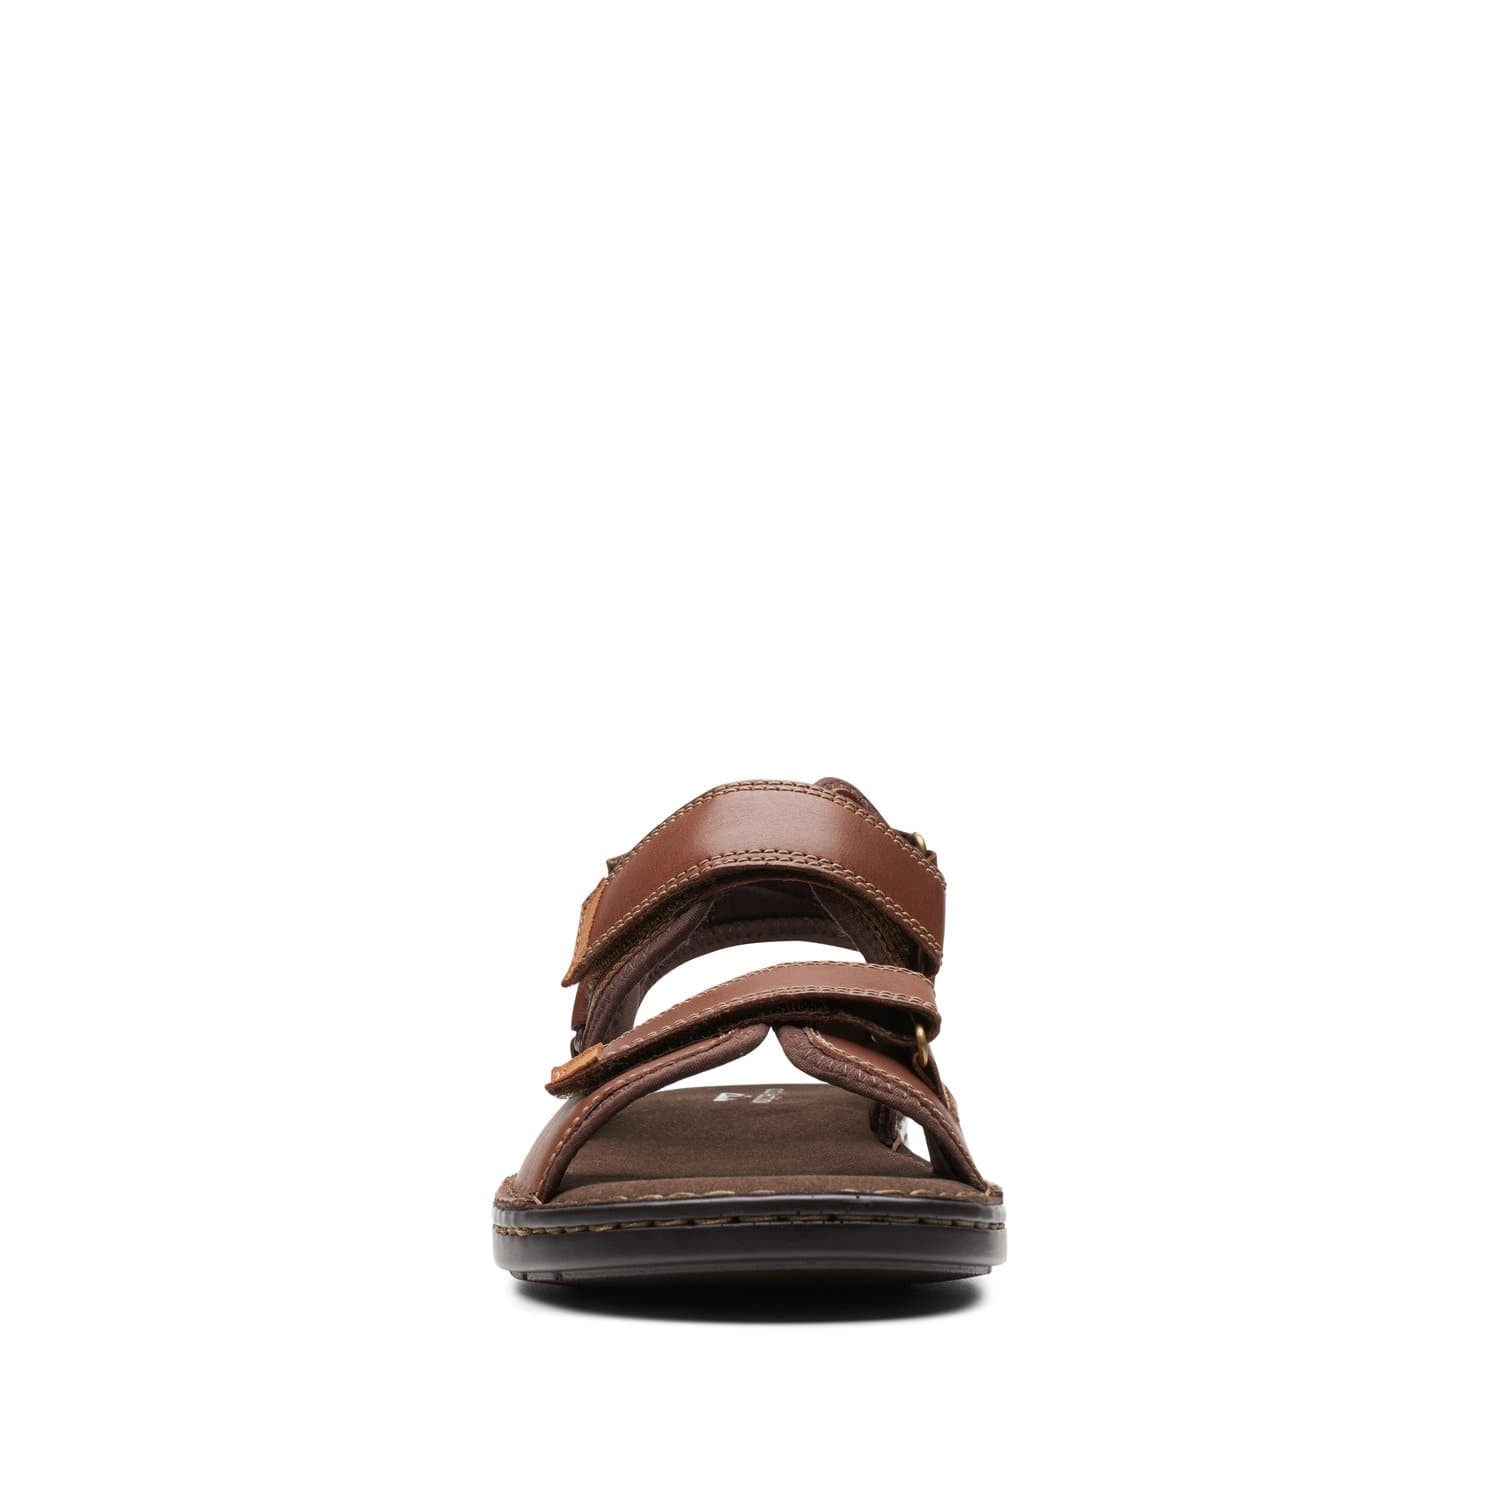 Clarks-Malone-Shore-Men's-Sandals-Tan-Leather-26148104